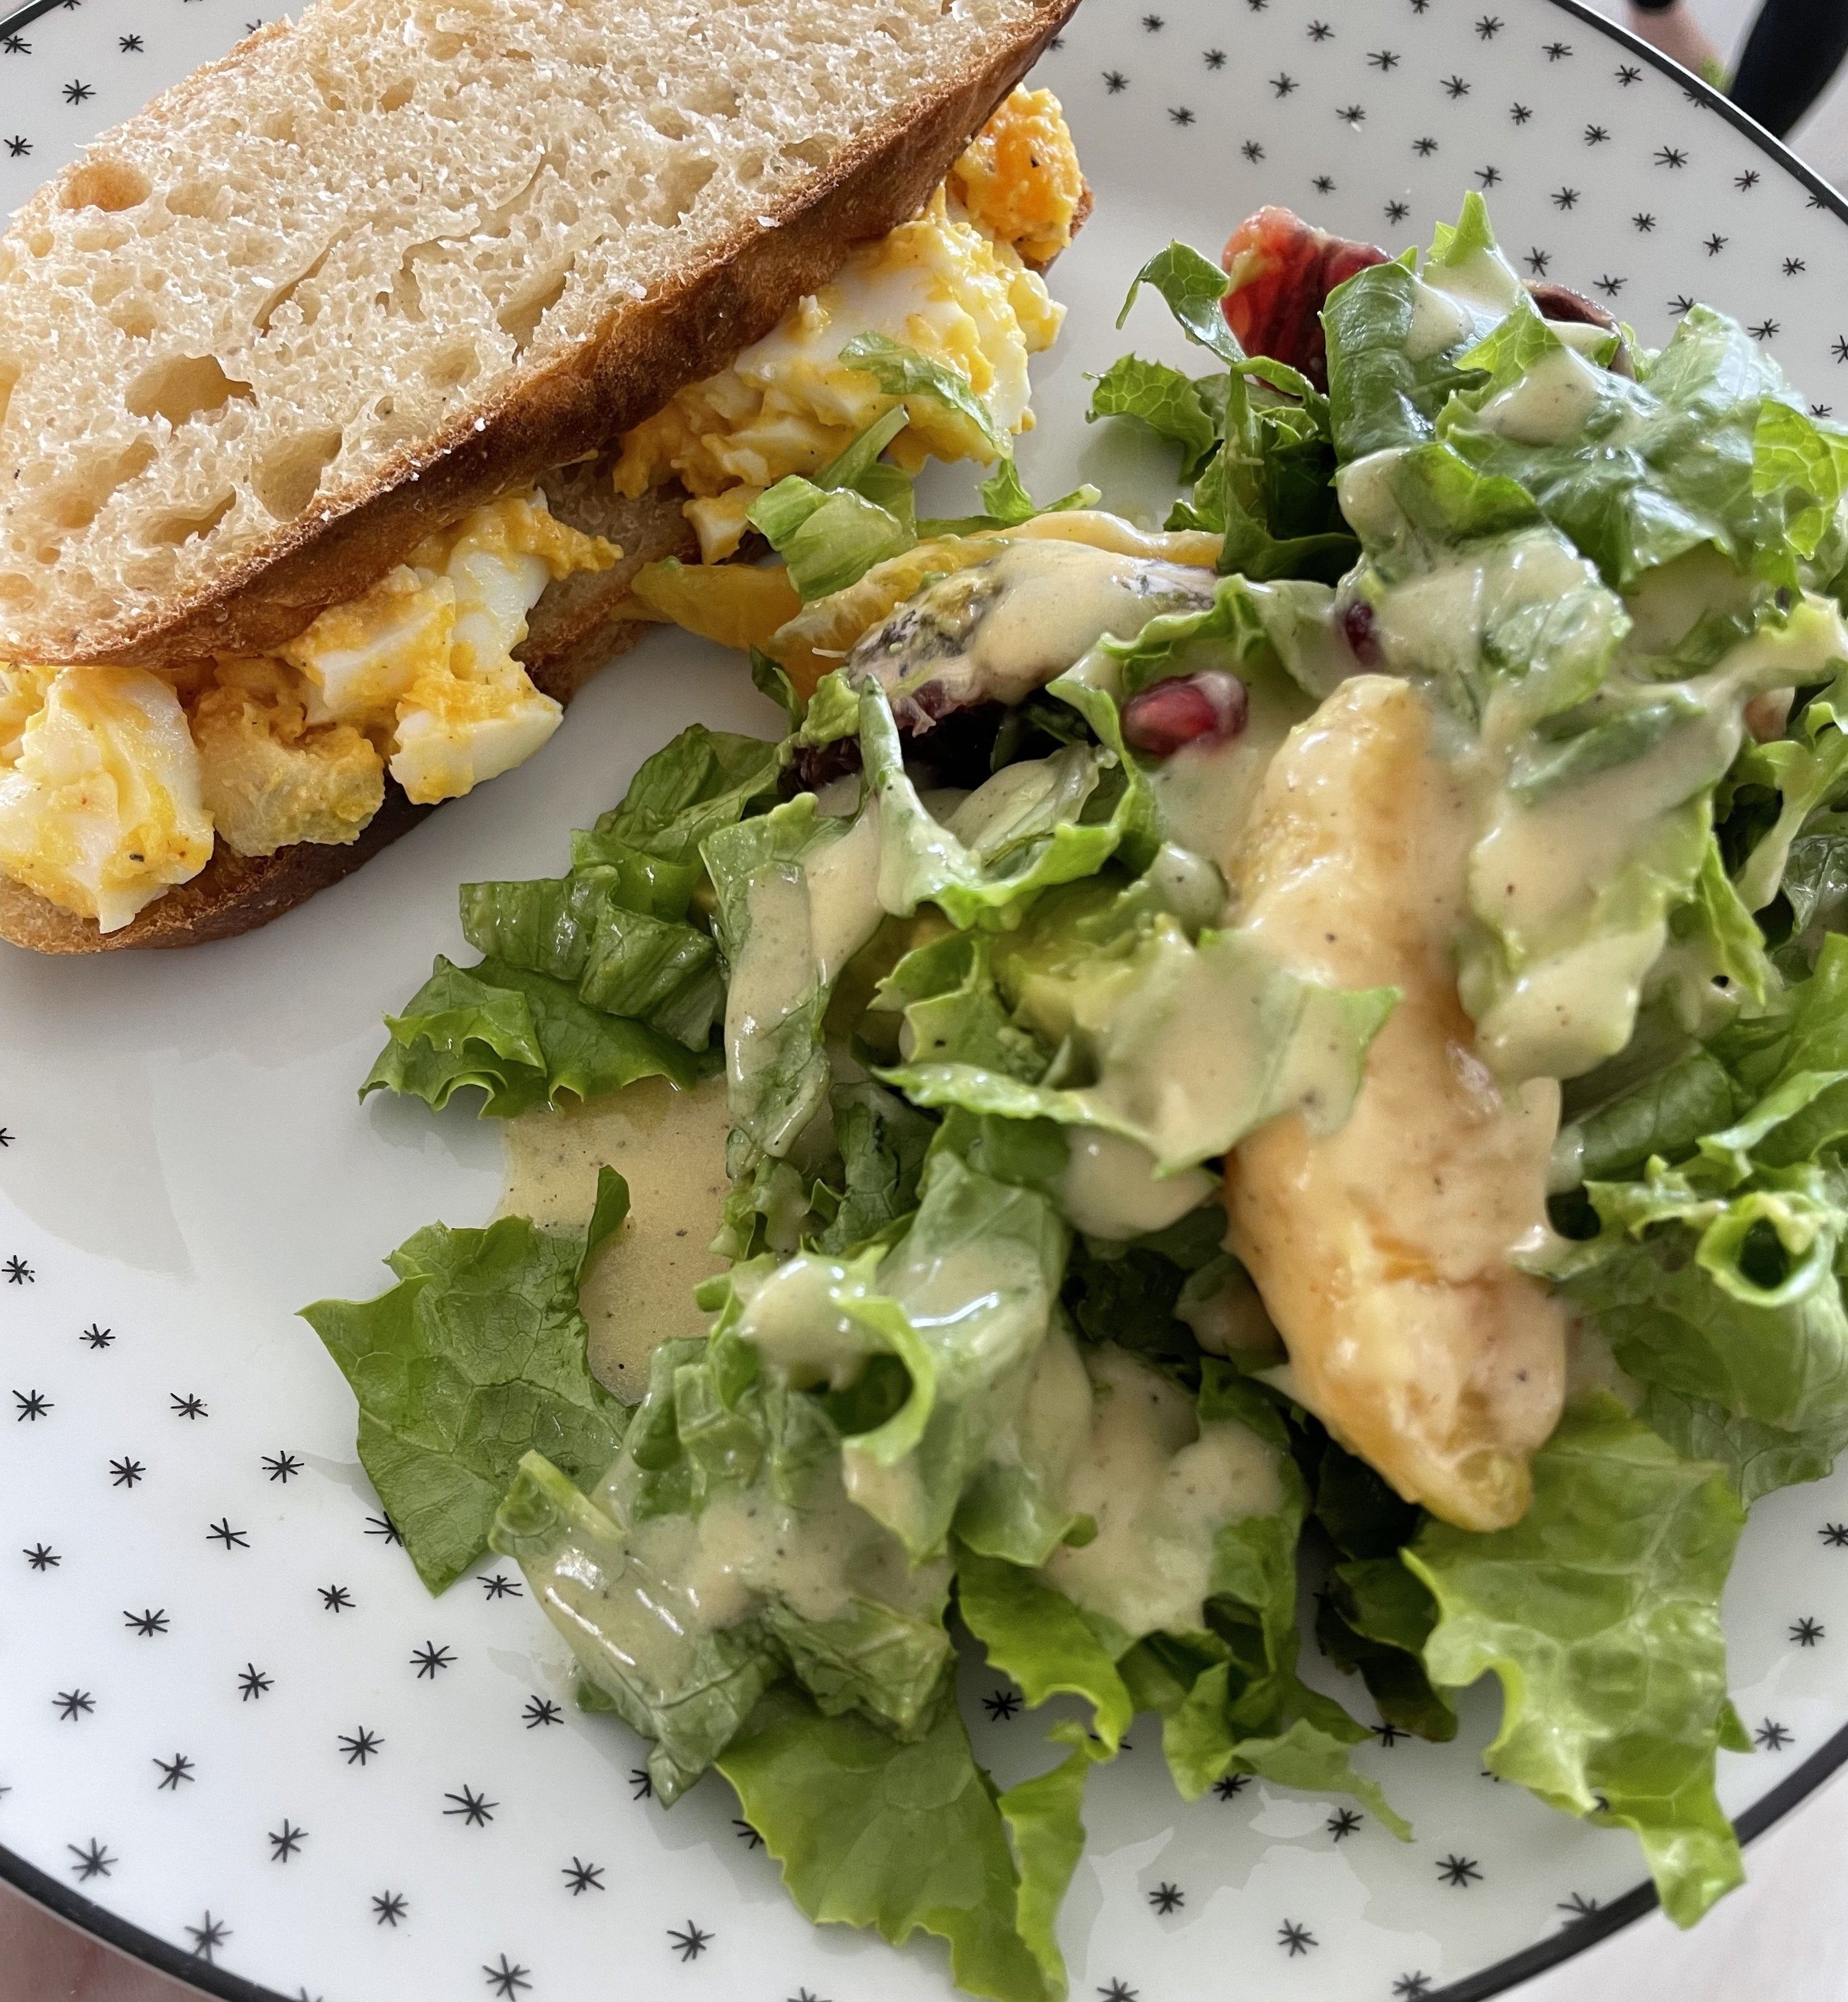 egg salad sandwich and salad on a plate